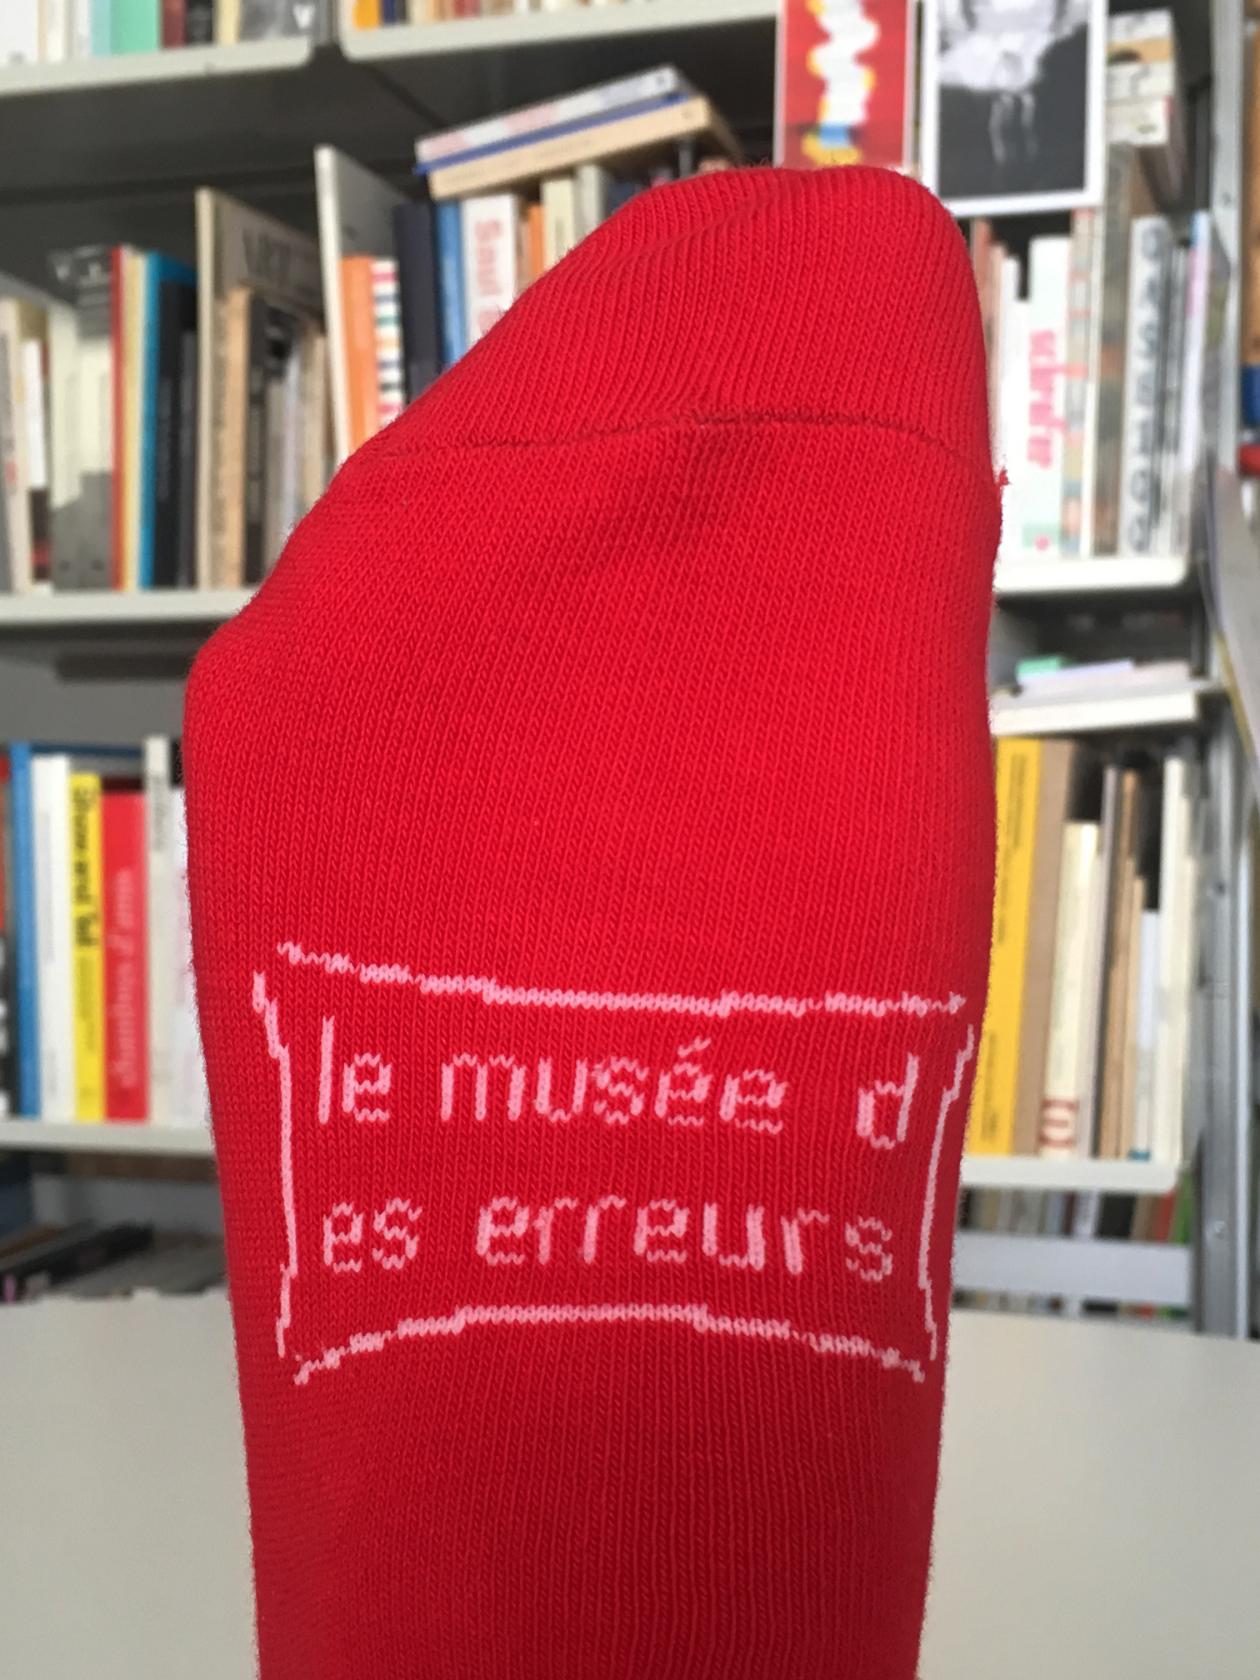 Museum of Mistakes pair of sock